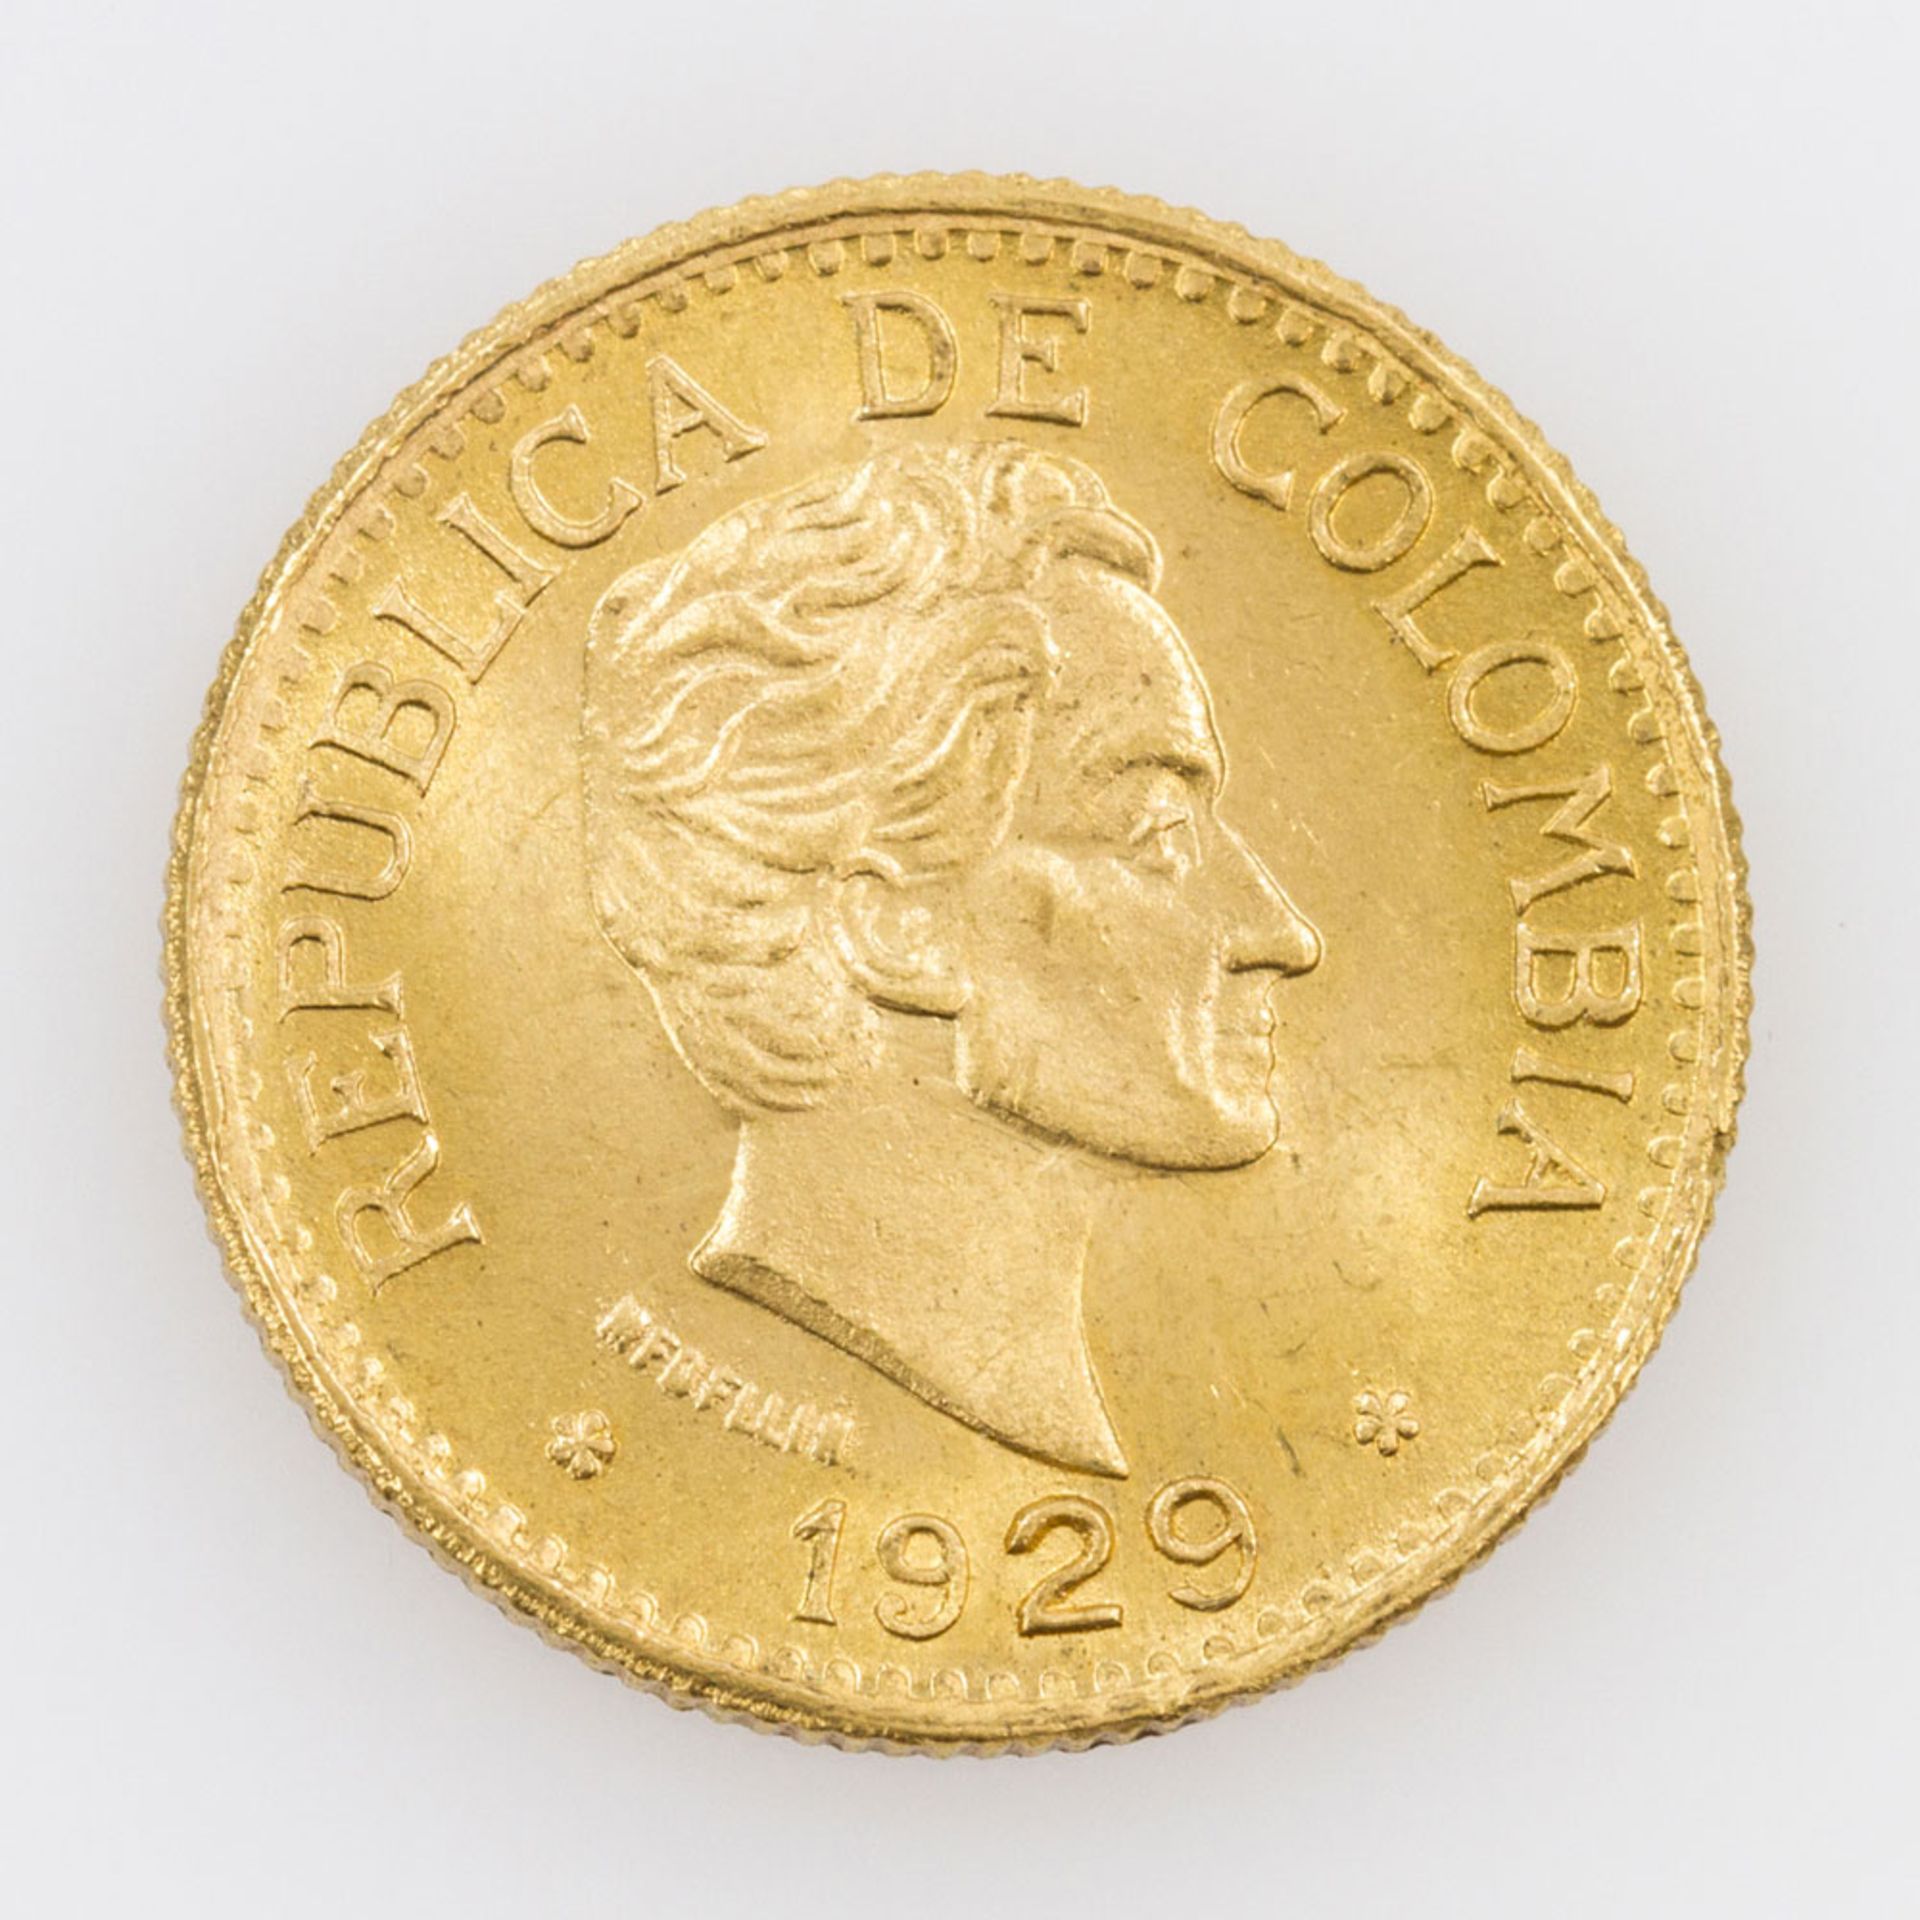 Kolumbien/GOLD - 5 Pesos 1929, ca. 7,32 g Au fein, ss, Rf.